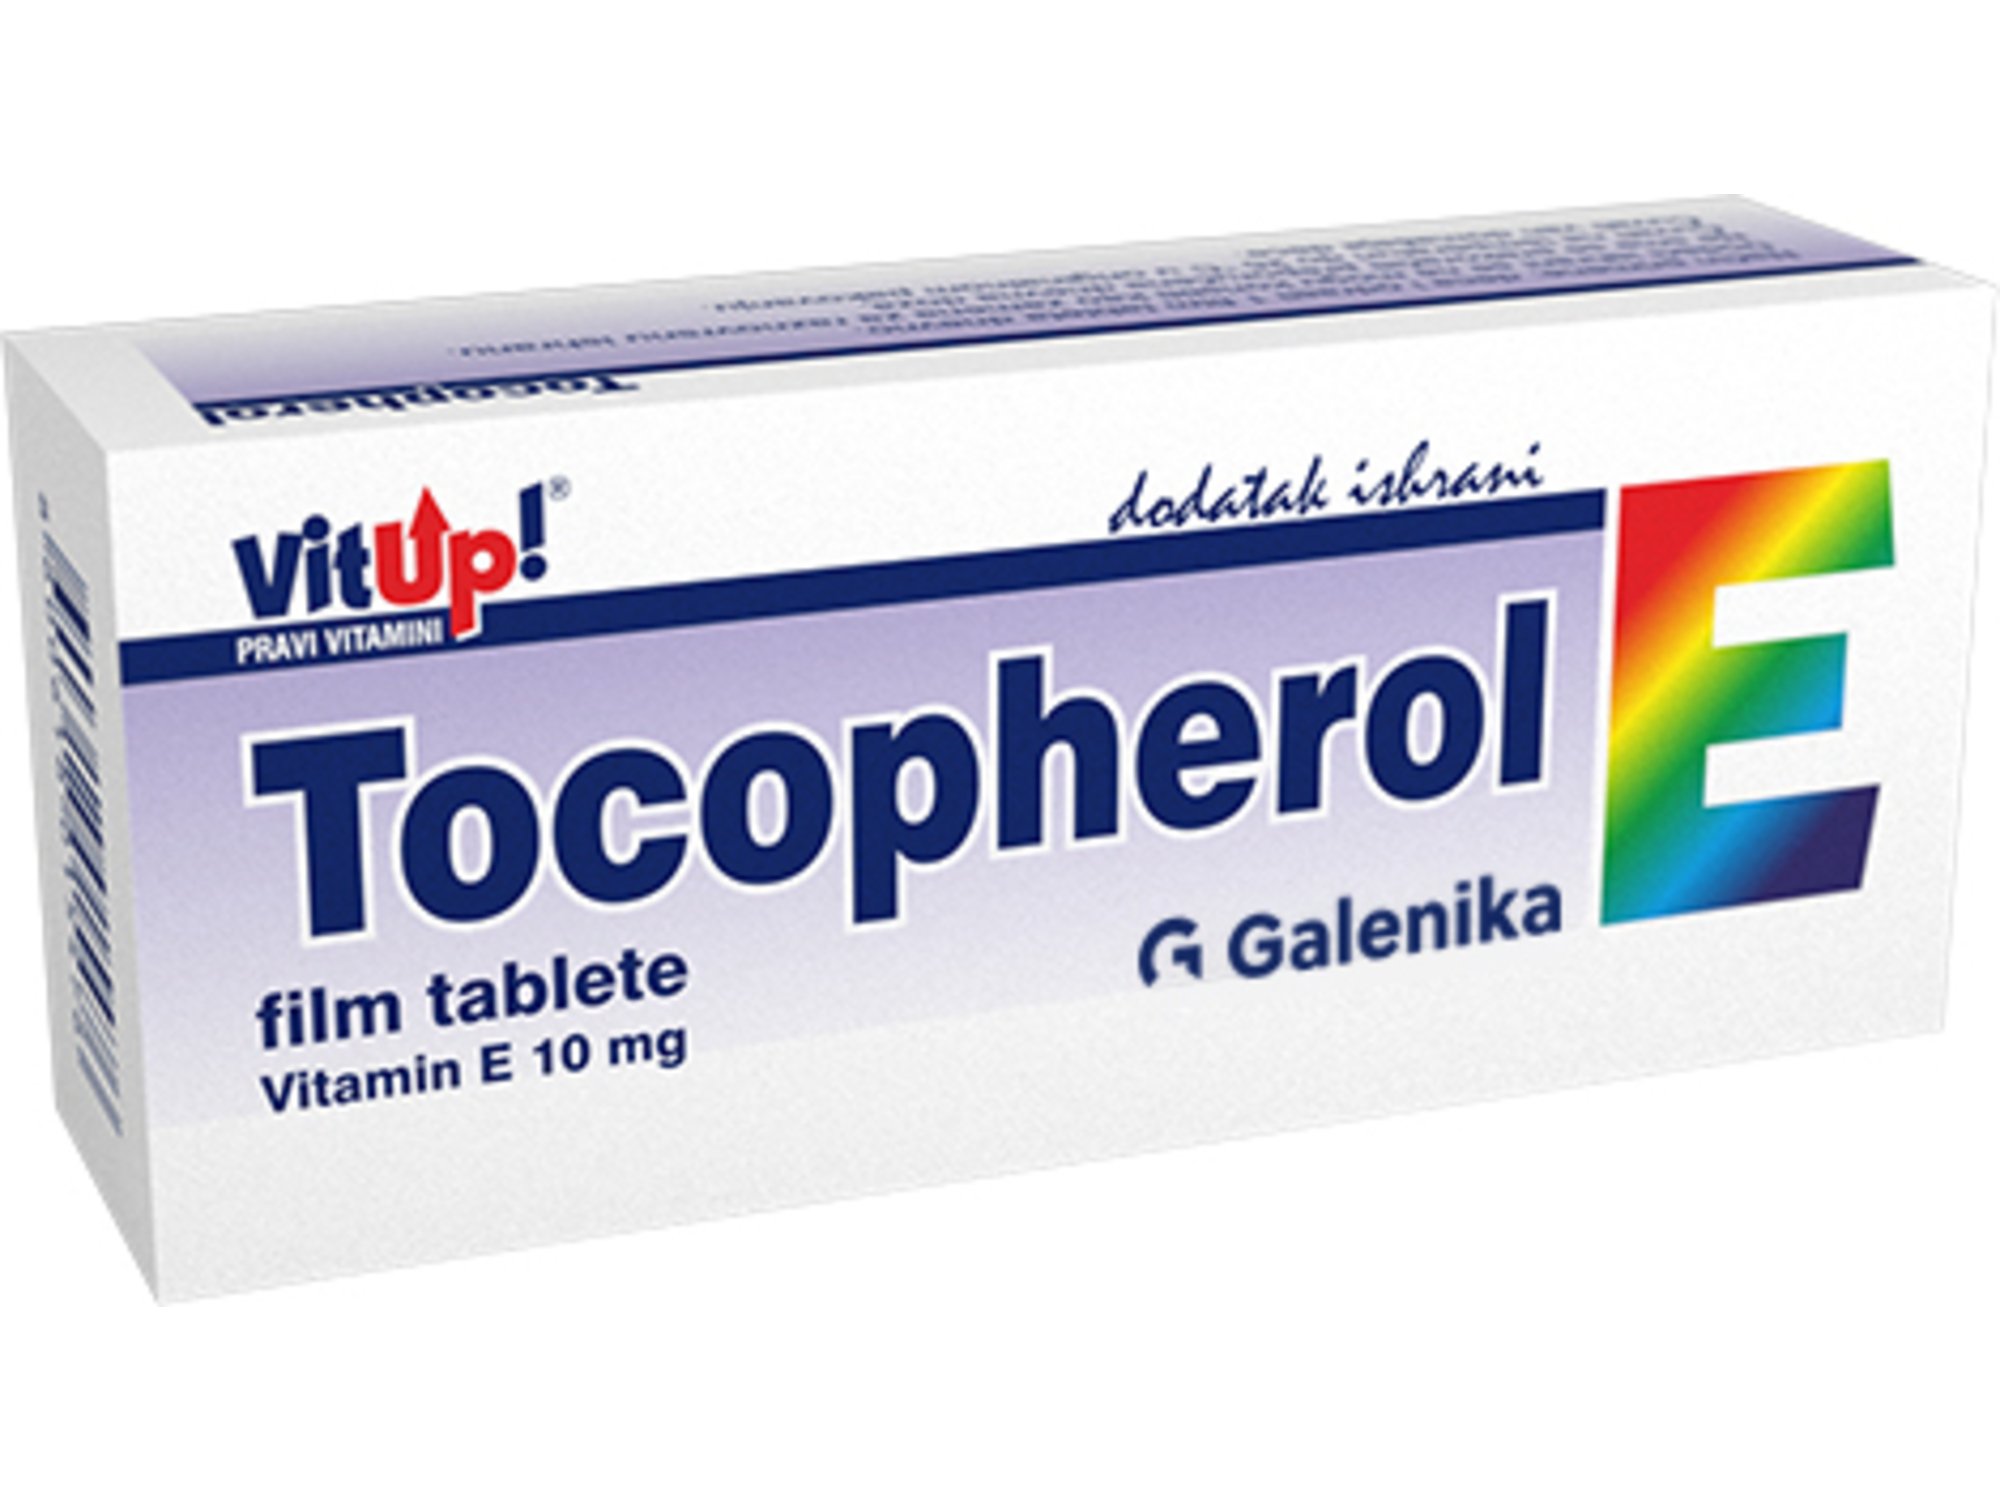 Tocopherol Film tablete 30x10mg